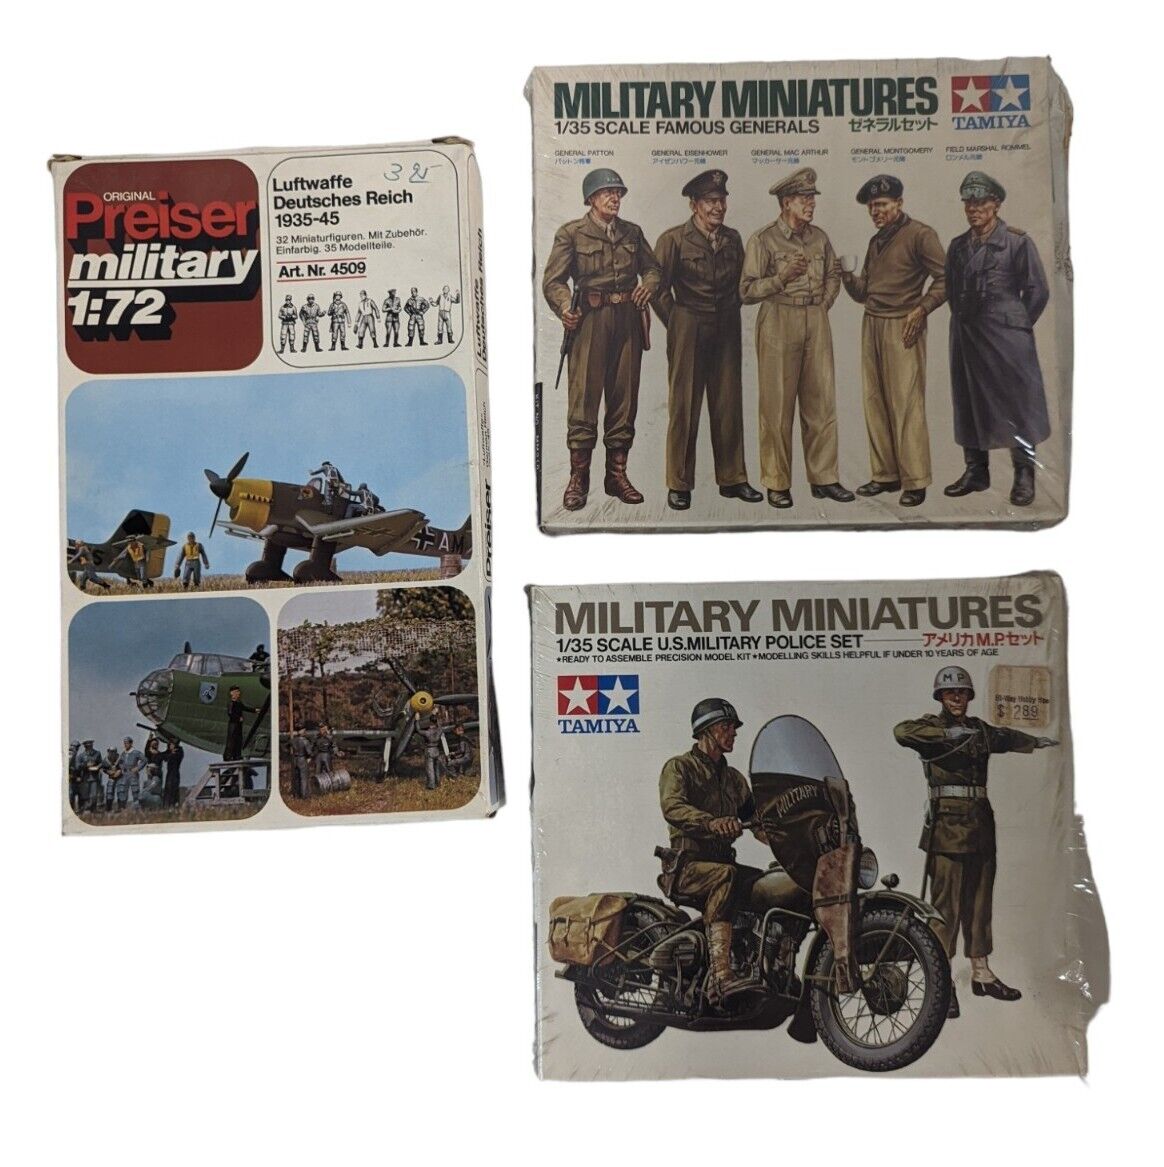 Tamiya Military Miniatures Preiser Figure Set WWII 1:35 Model Kit Lot of 3 NIB Tamiya MM218, MM184